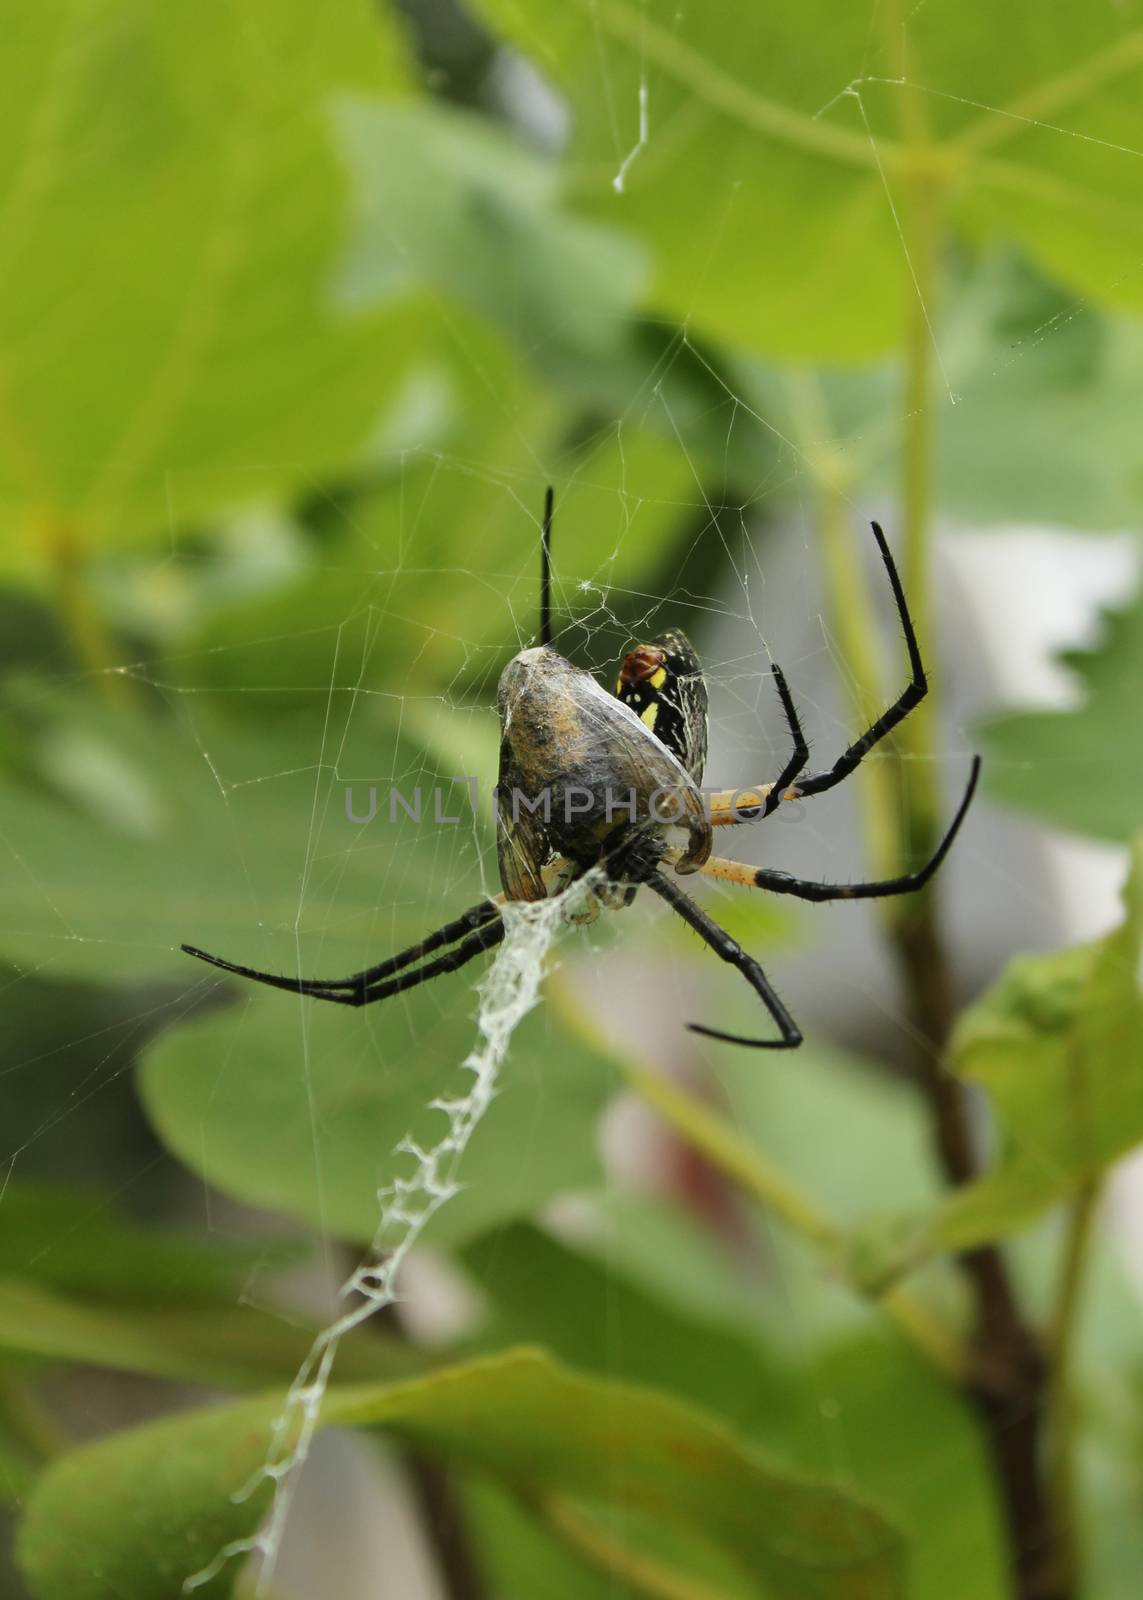 Black and Yellow Garden Spider Argiope aurantia by Marti157900